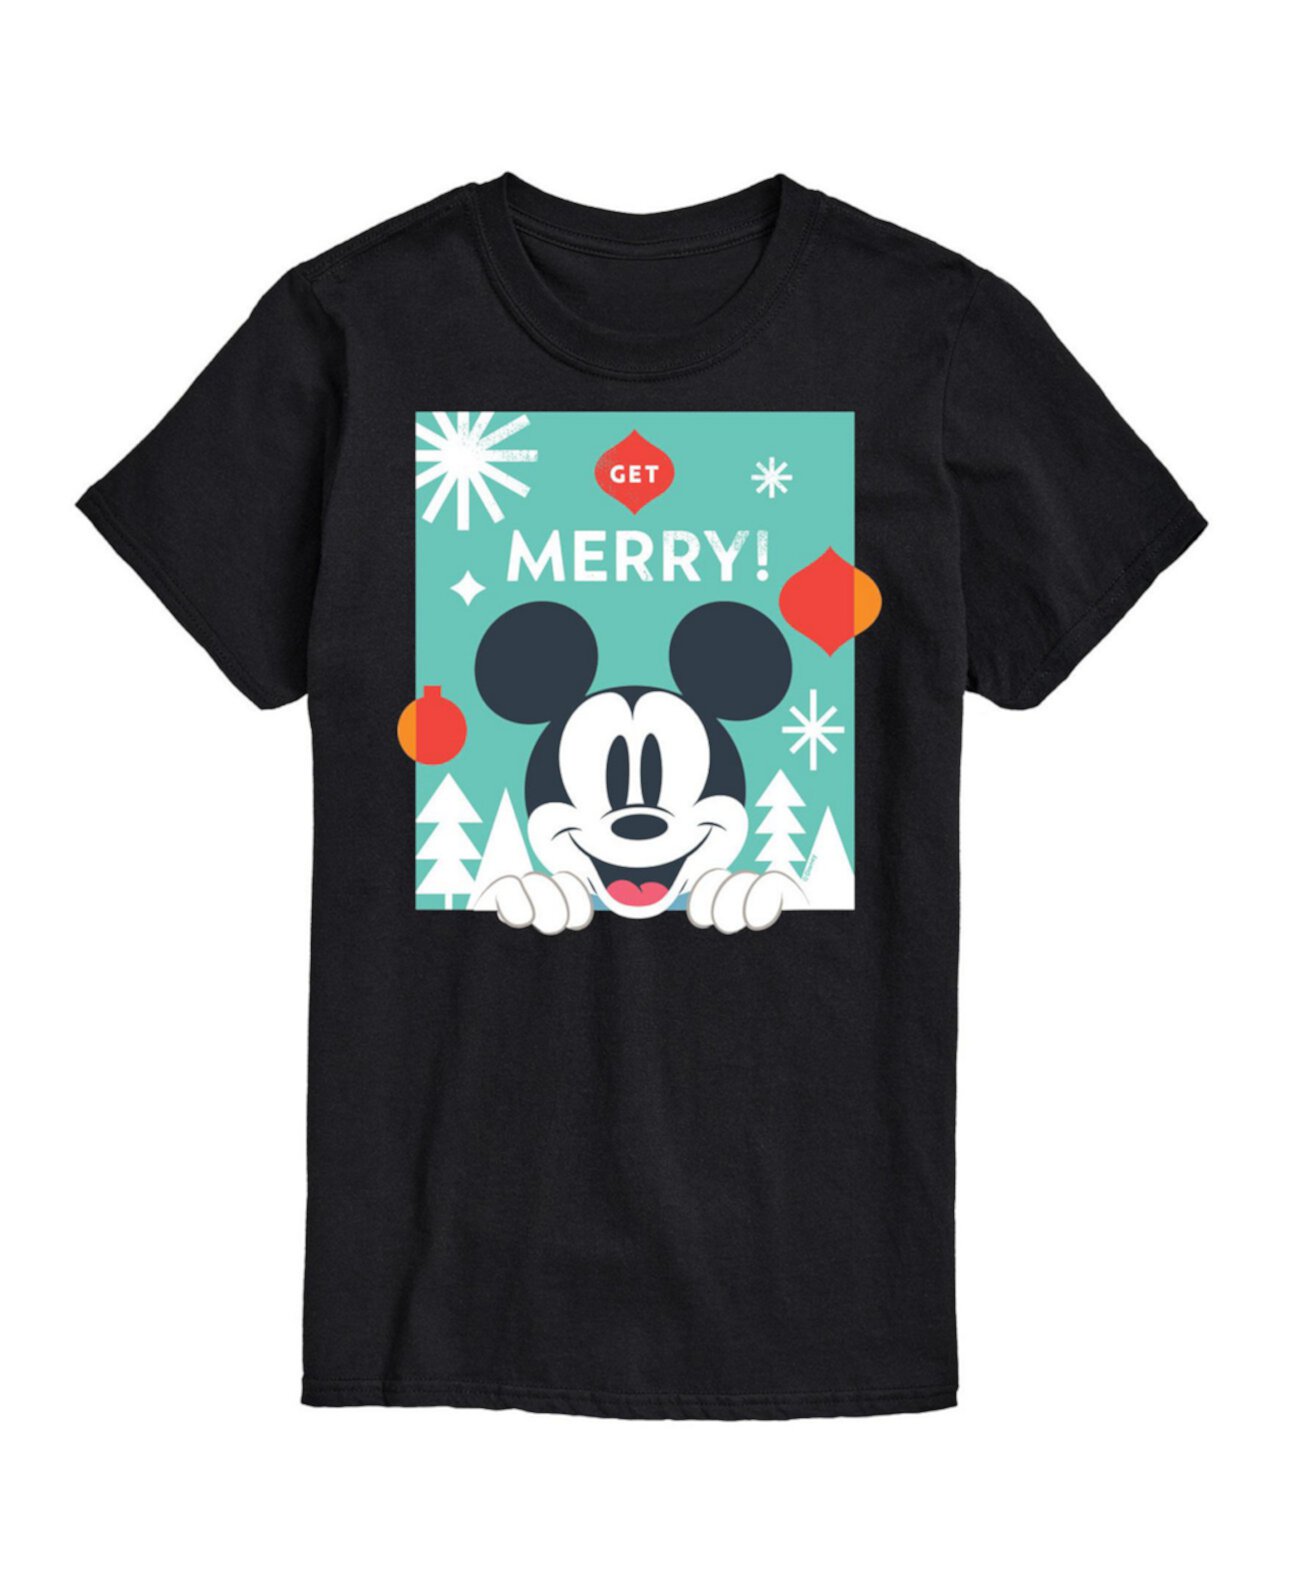 Мужская футболка Disney Holiday с короткими рукавами AIRWAVES